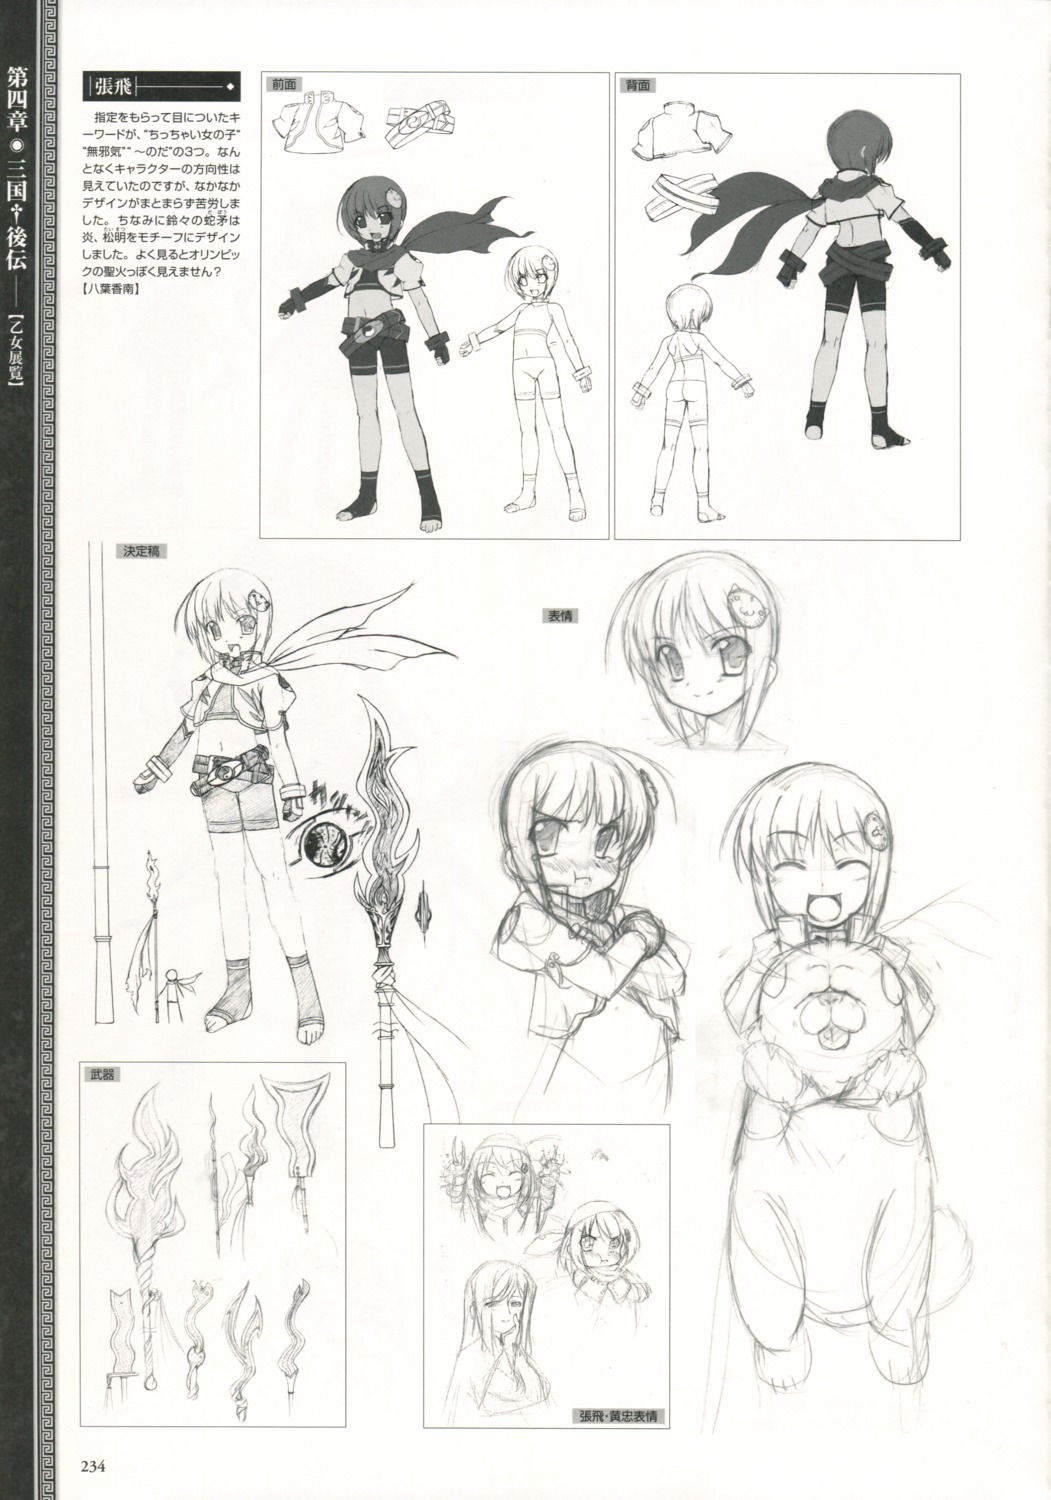 baseson character_design chouhi koihime_musou monochrome sketch